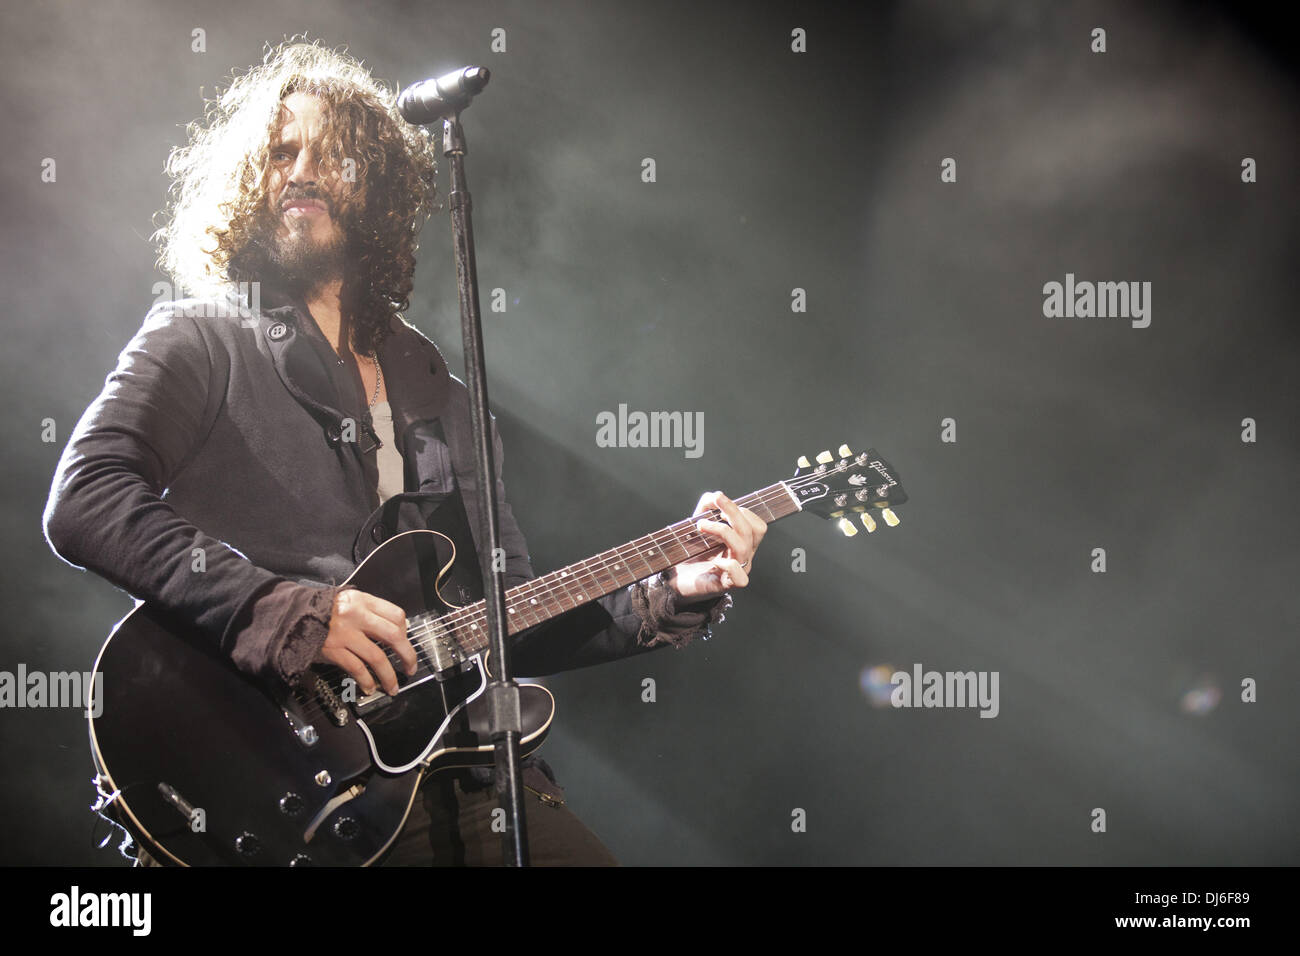 Top 10 Photos HQ  # 2 Chris Cornell Soundgarden 4x6 Photo Set 